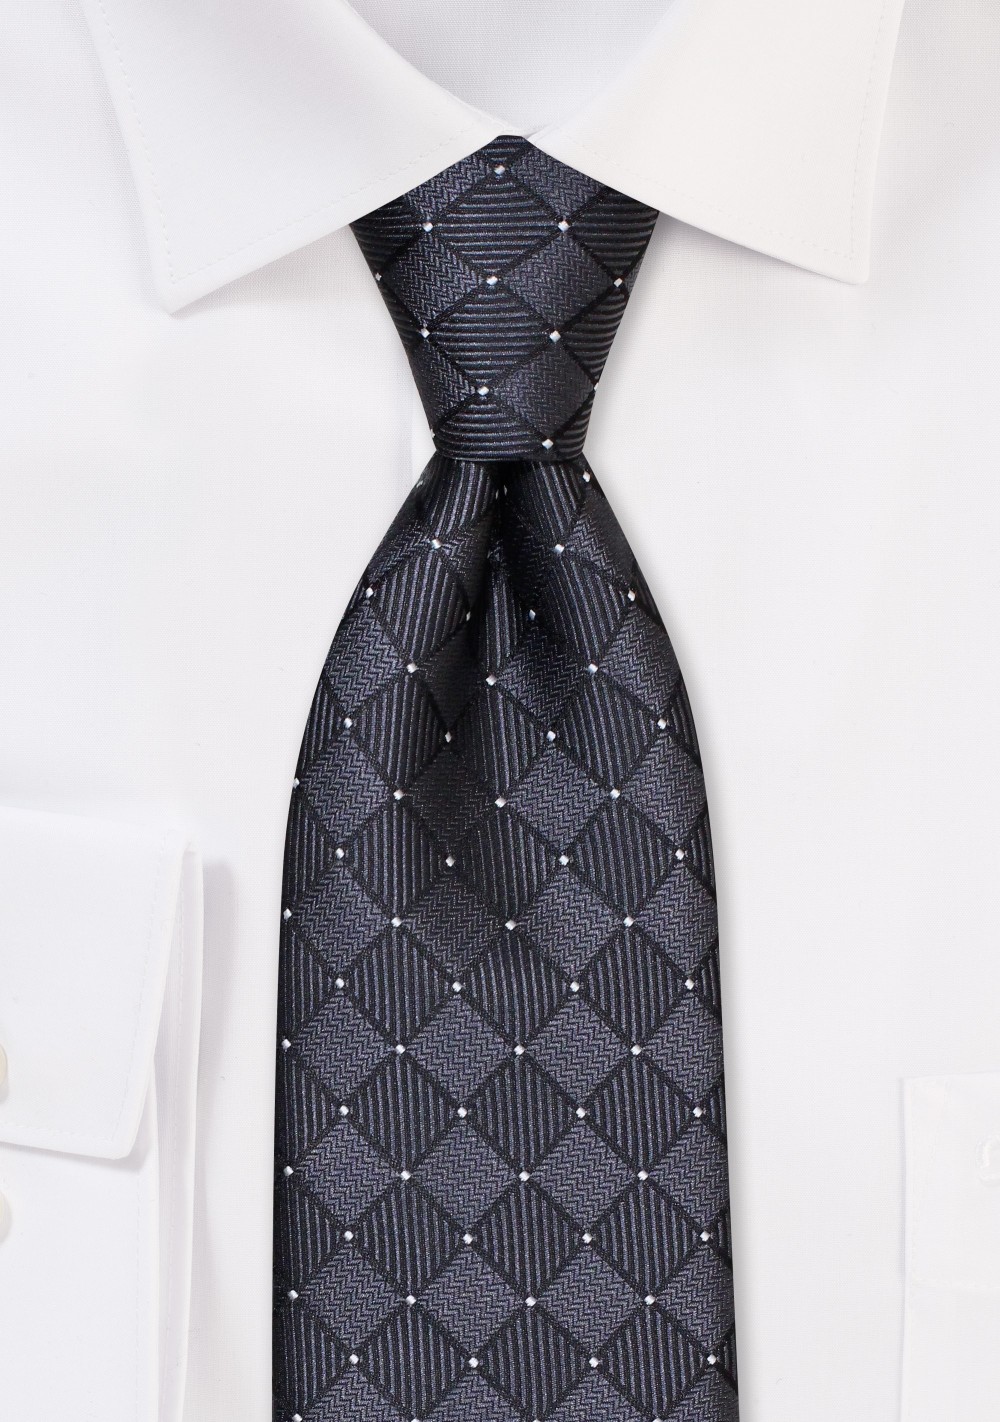 Black Tie with Woven Check Design